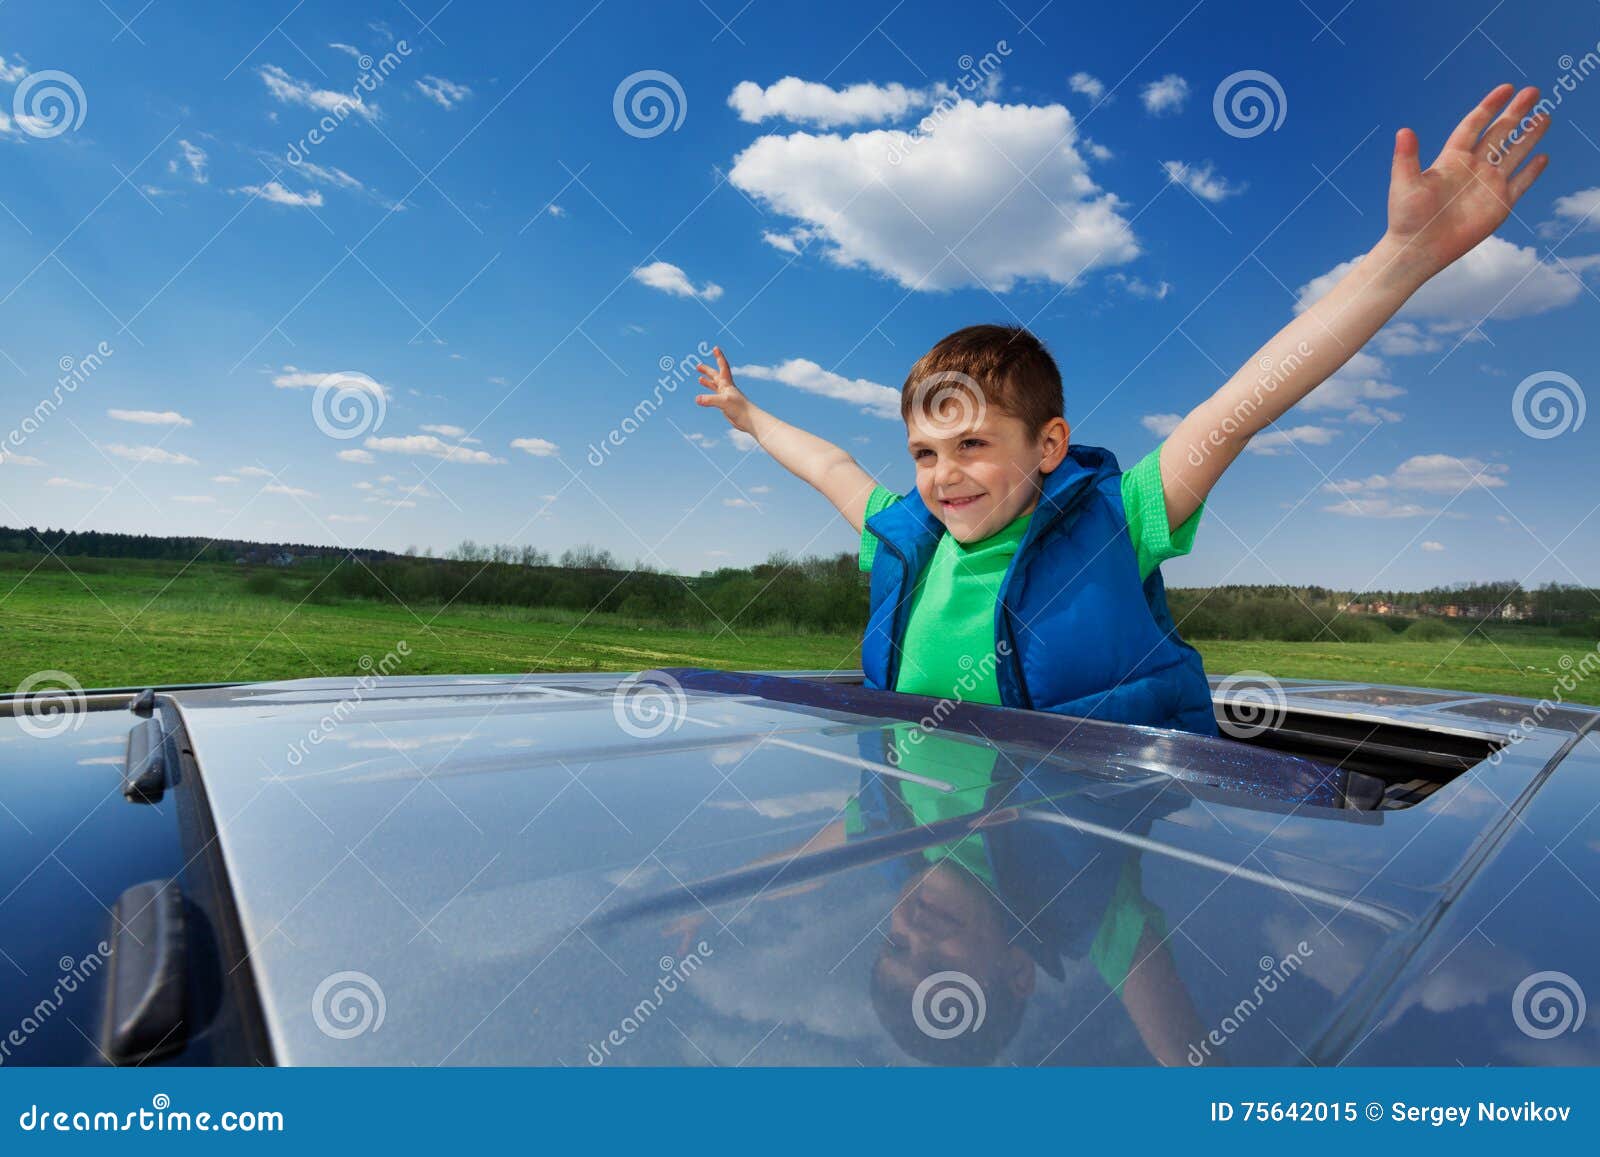 smiling kid boy enjoying freedom on sunroof of car